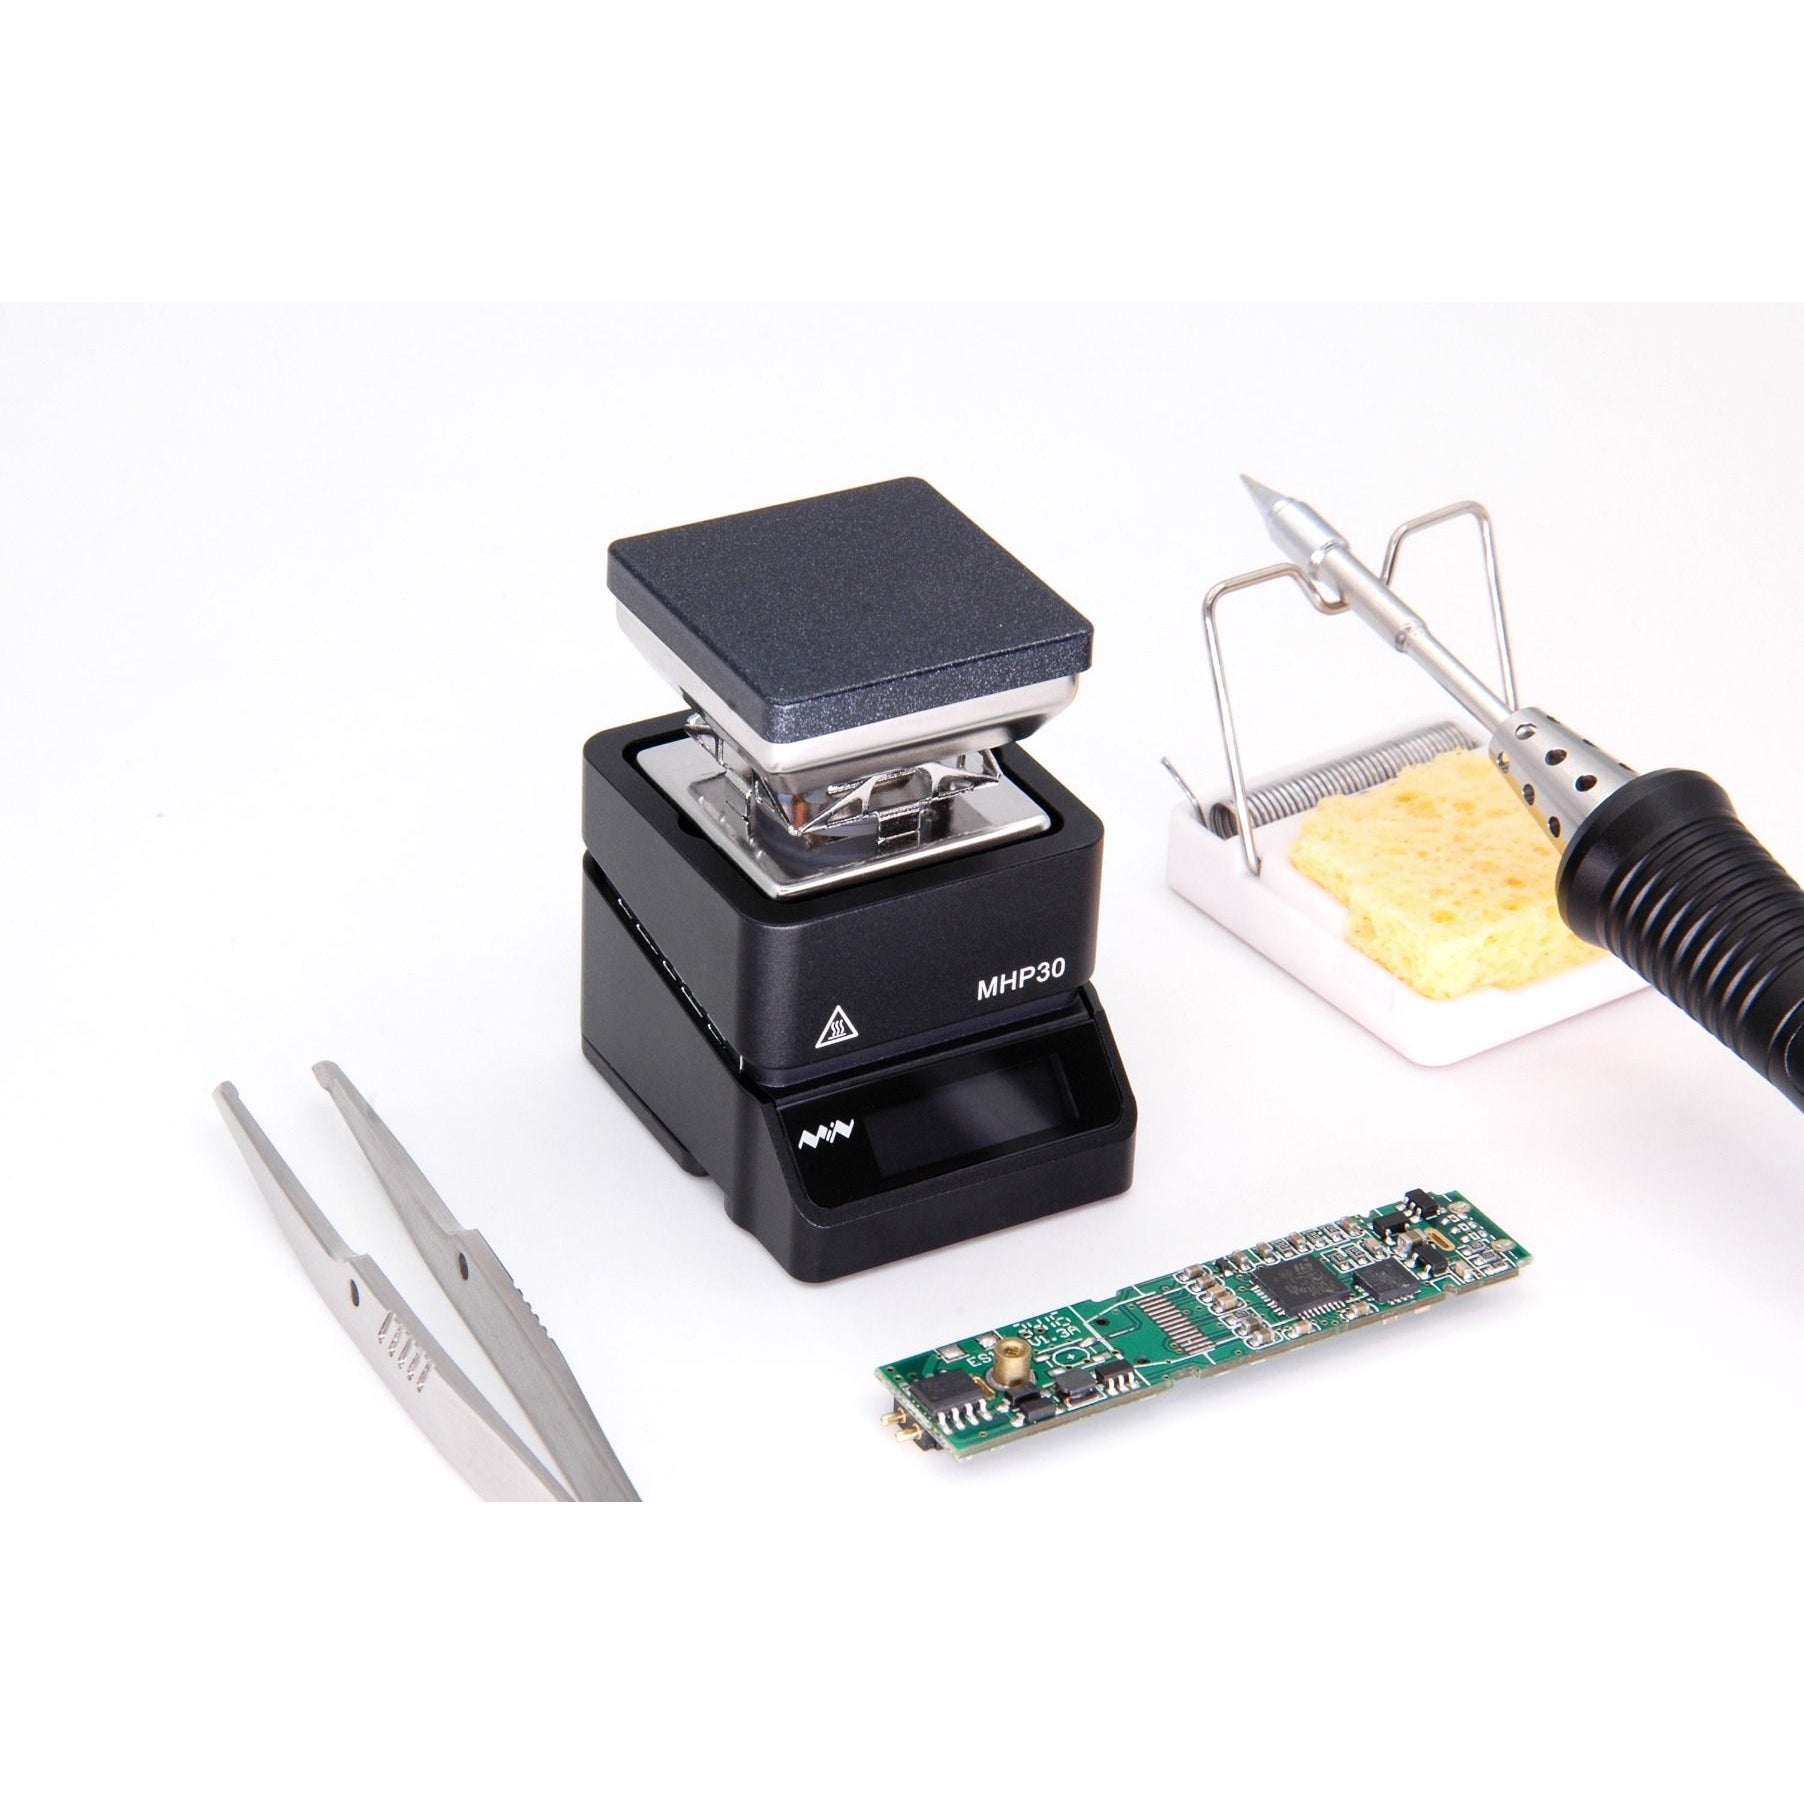 Miniware MHP30 Mini Hot Plate Preheater-Miniware-K and A Electronics